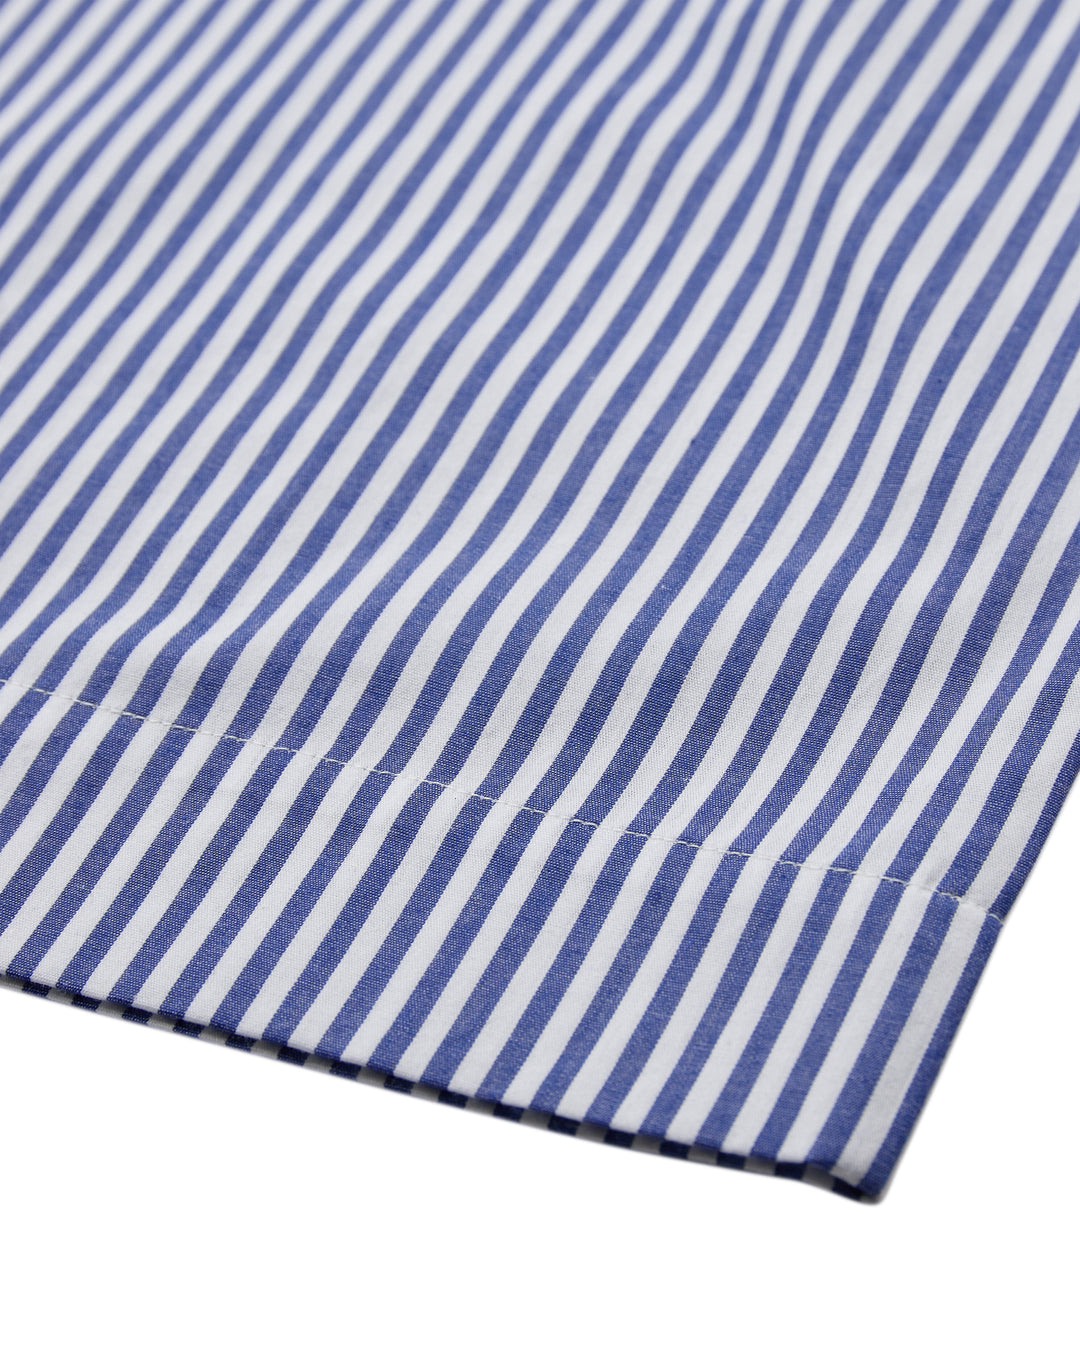 Forudbestilling - H2O - Rønne Essential Pajamas Pants - 7760 Blue/White Stripe Bukser 